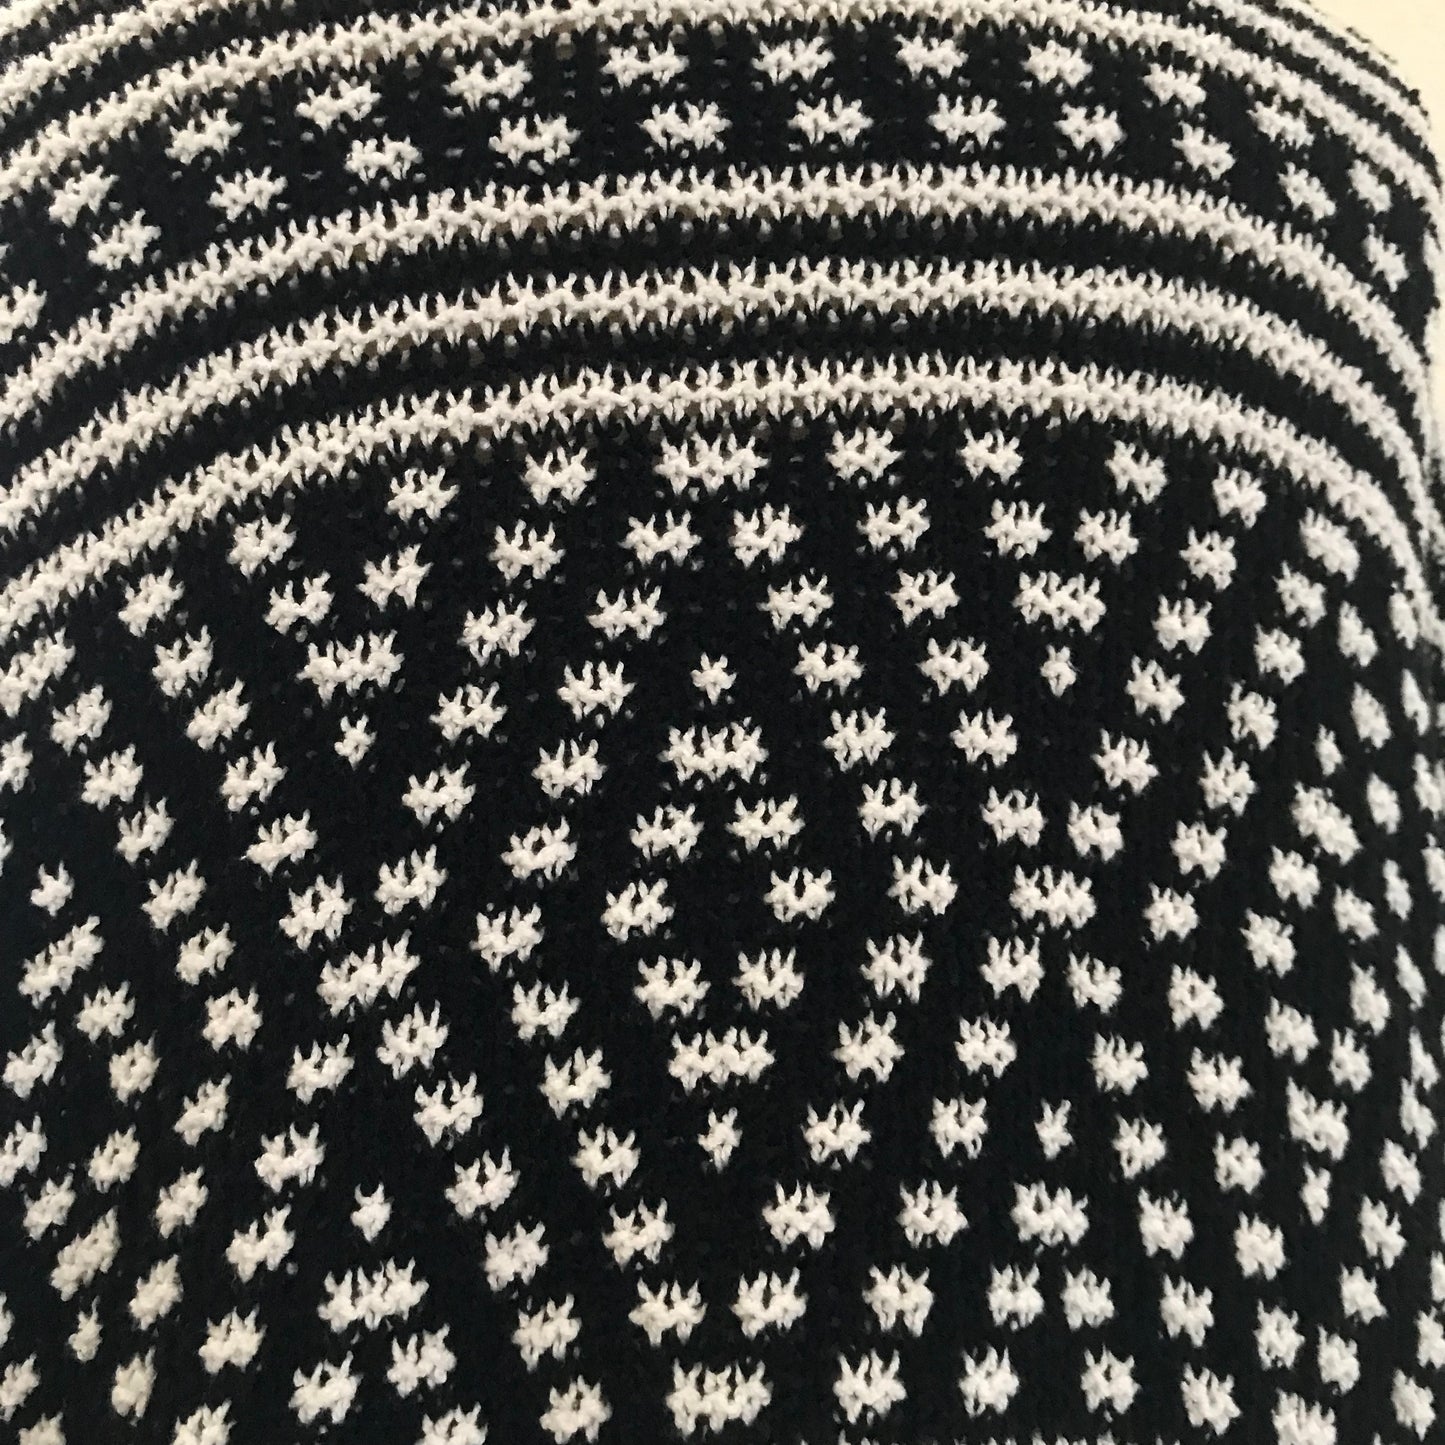 Madewell Black Knit Geometric Cardigan Sweater